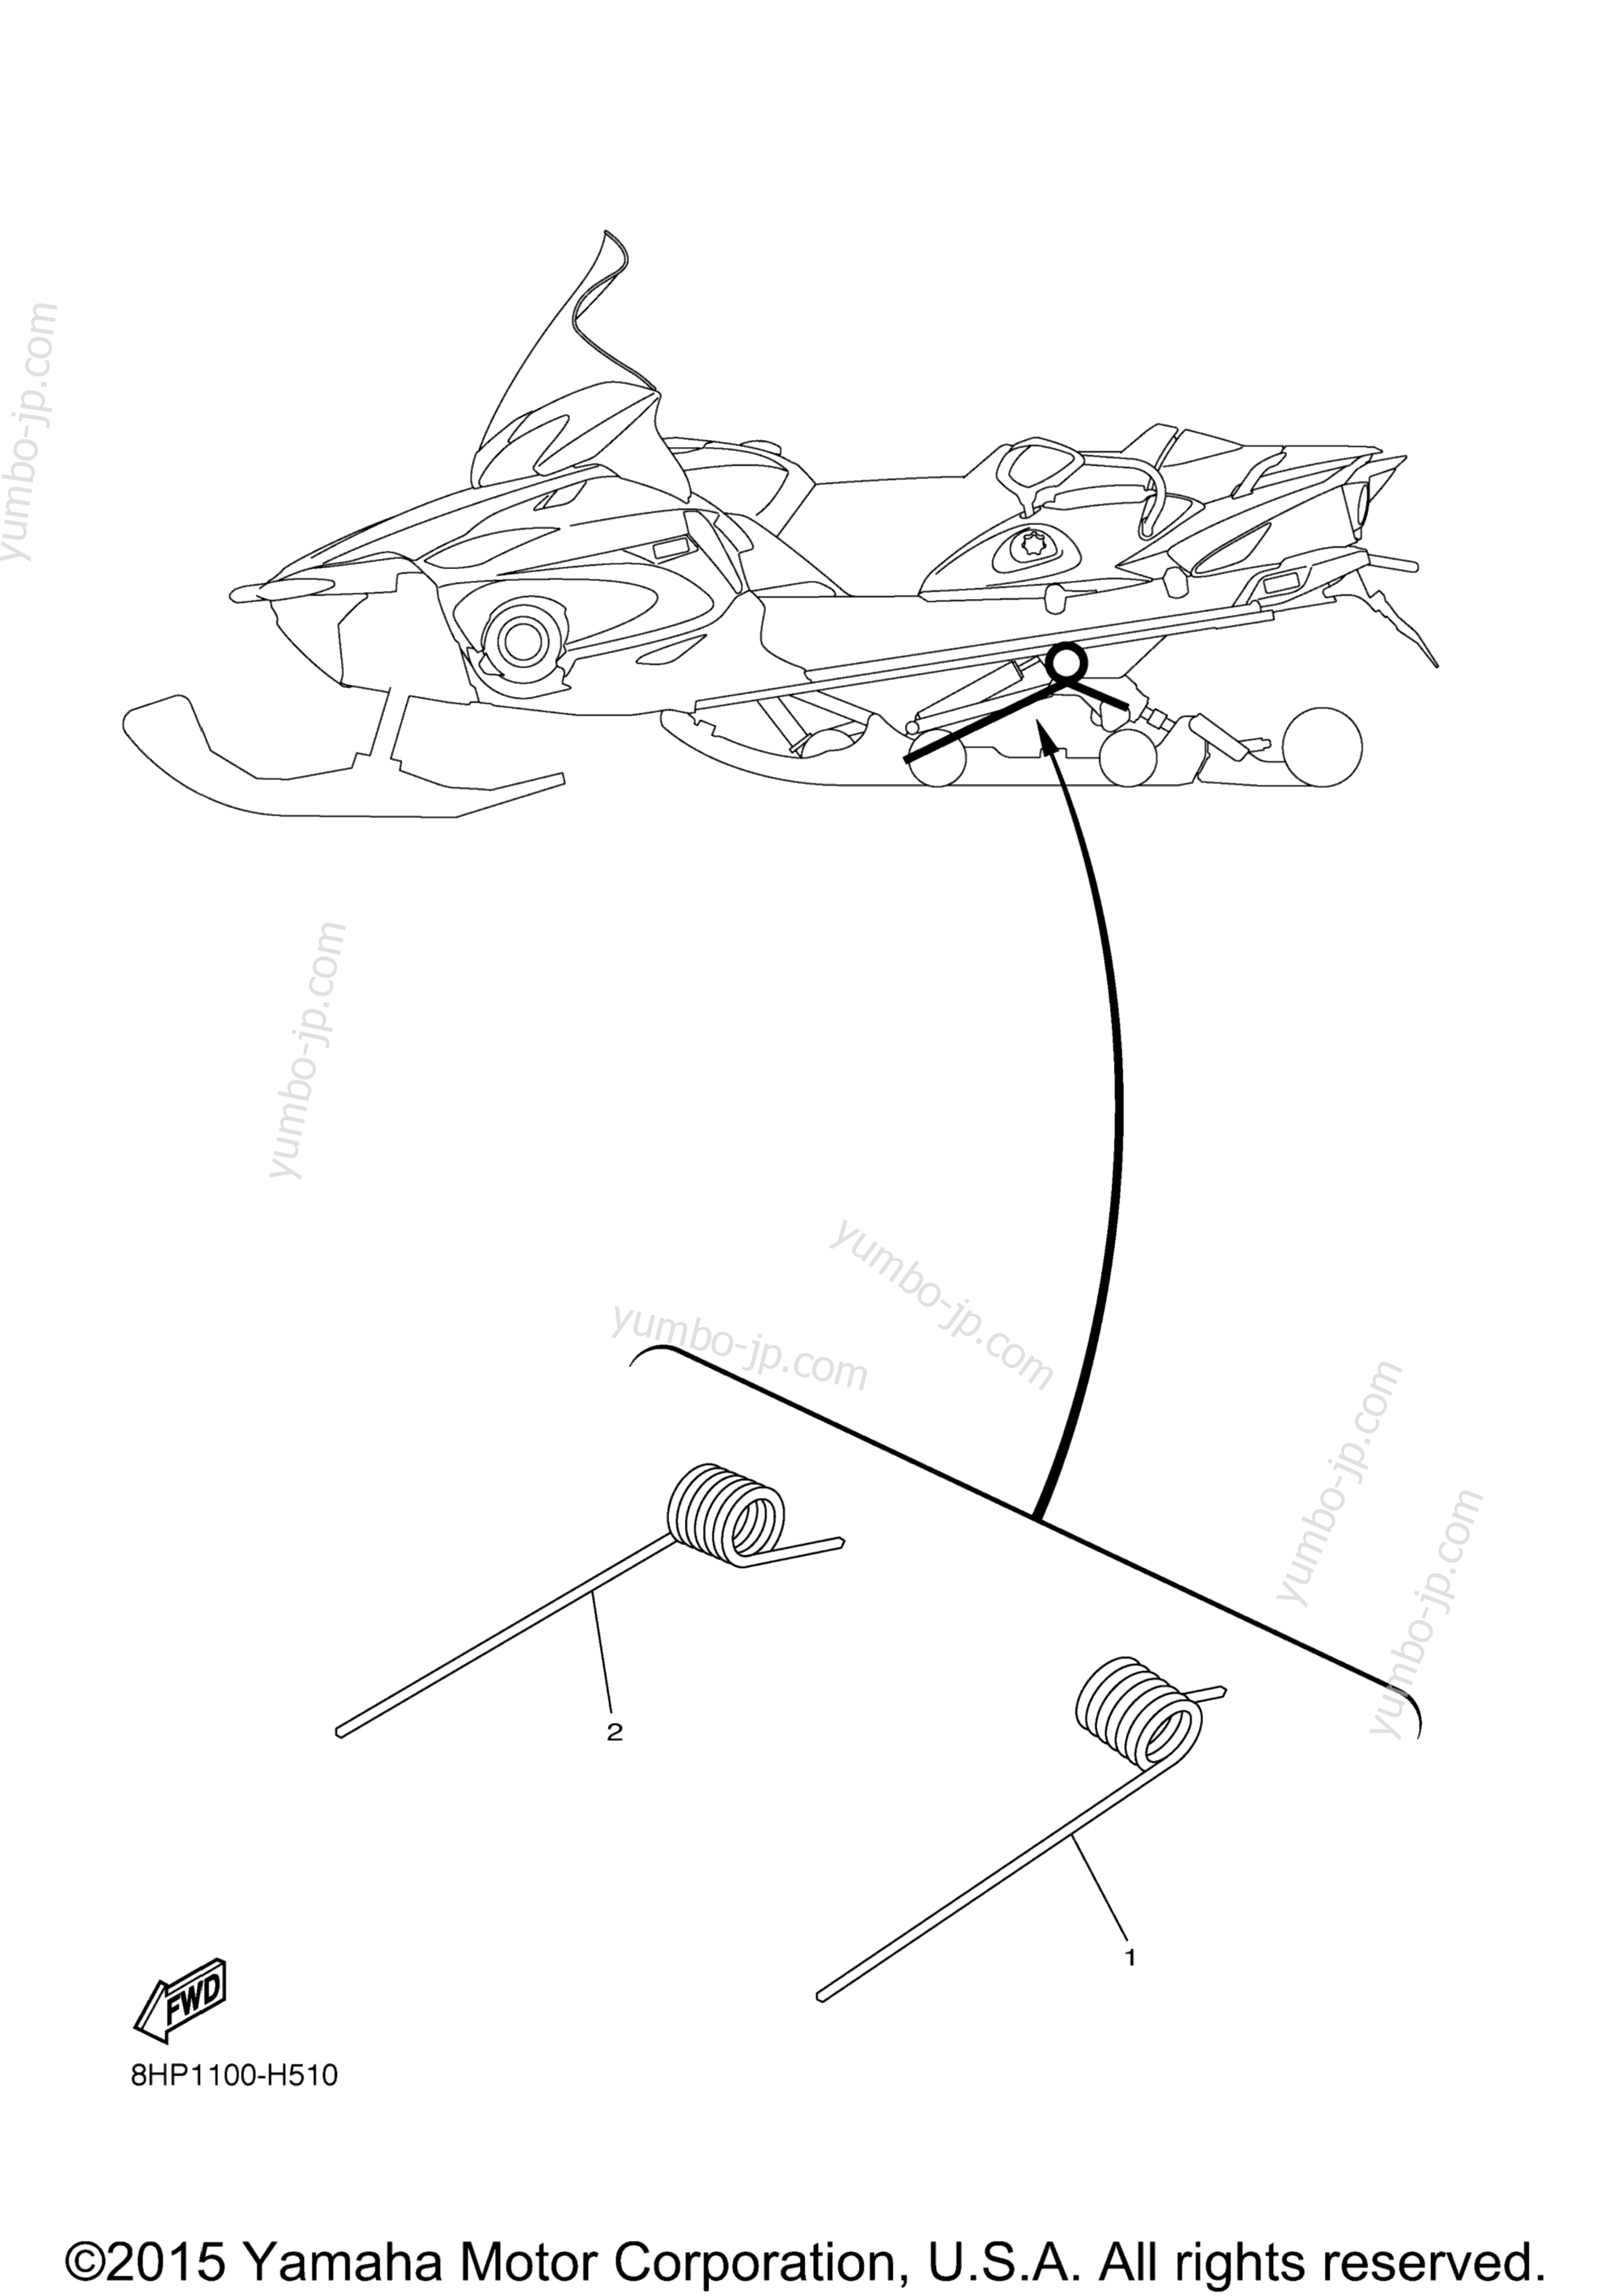 Alternate Rear Suspension для снегоходов YAMAHA RSVENTURE TF E-BAT (RST90TFYGR) 2016 г.